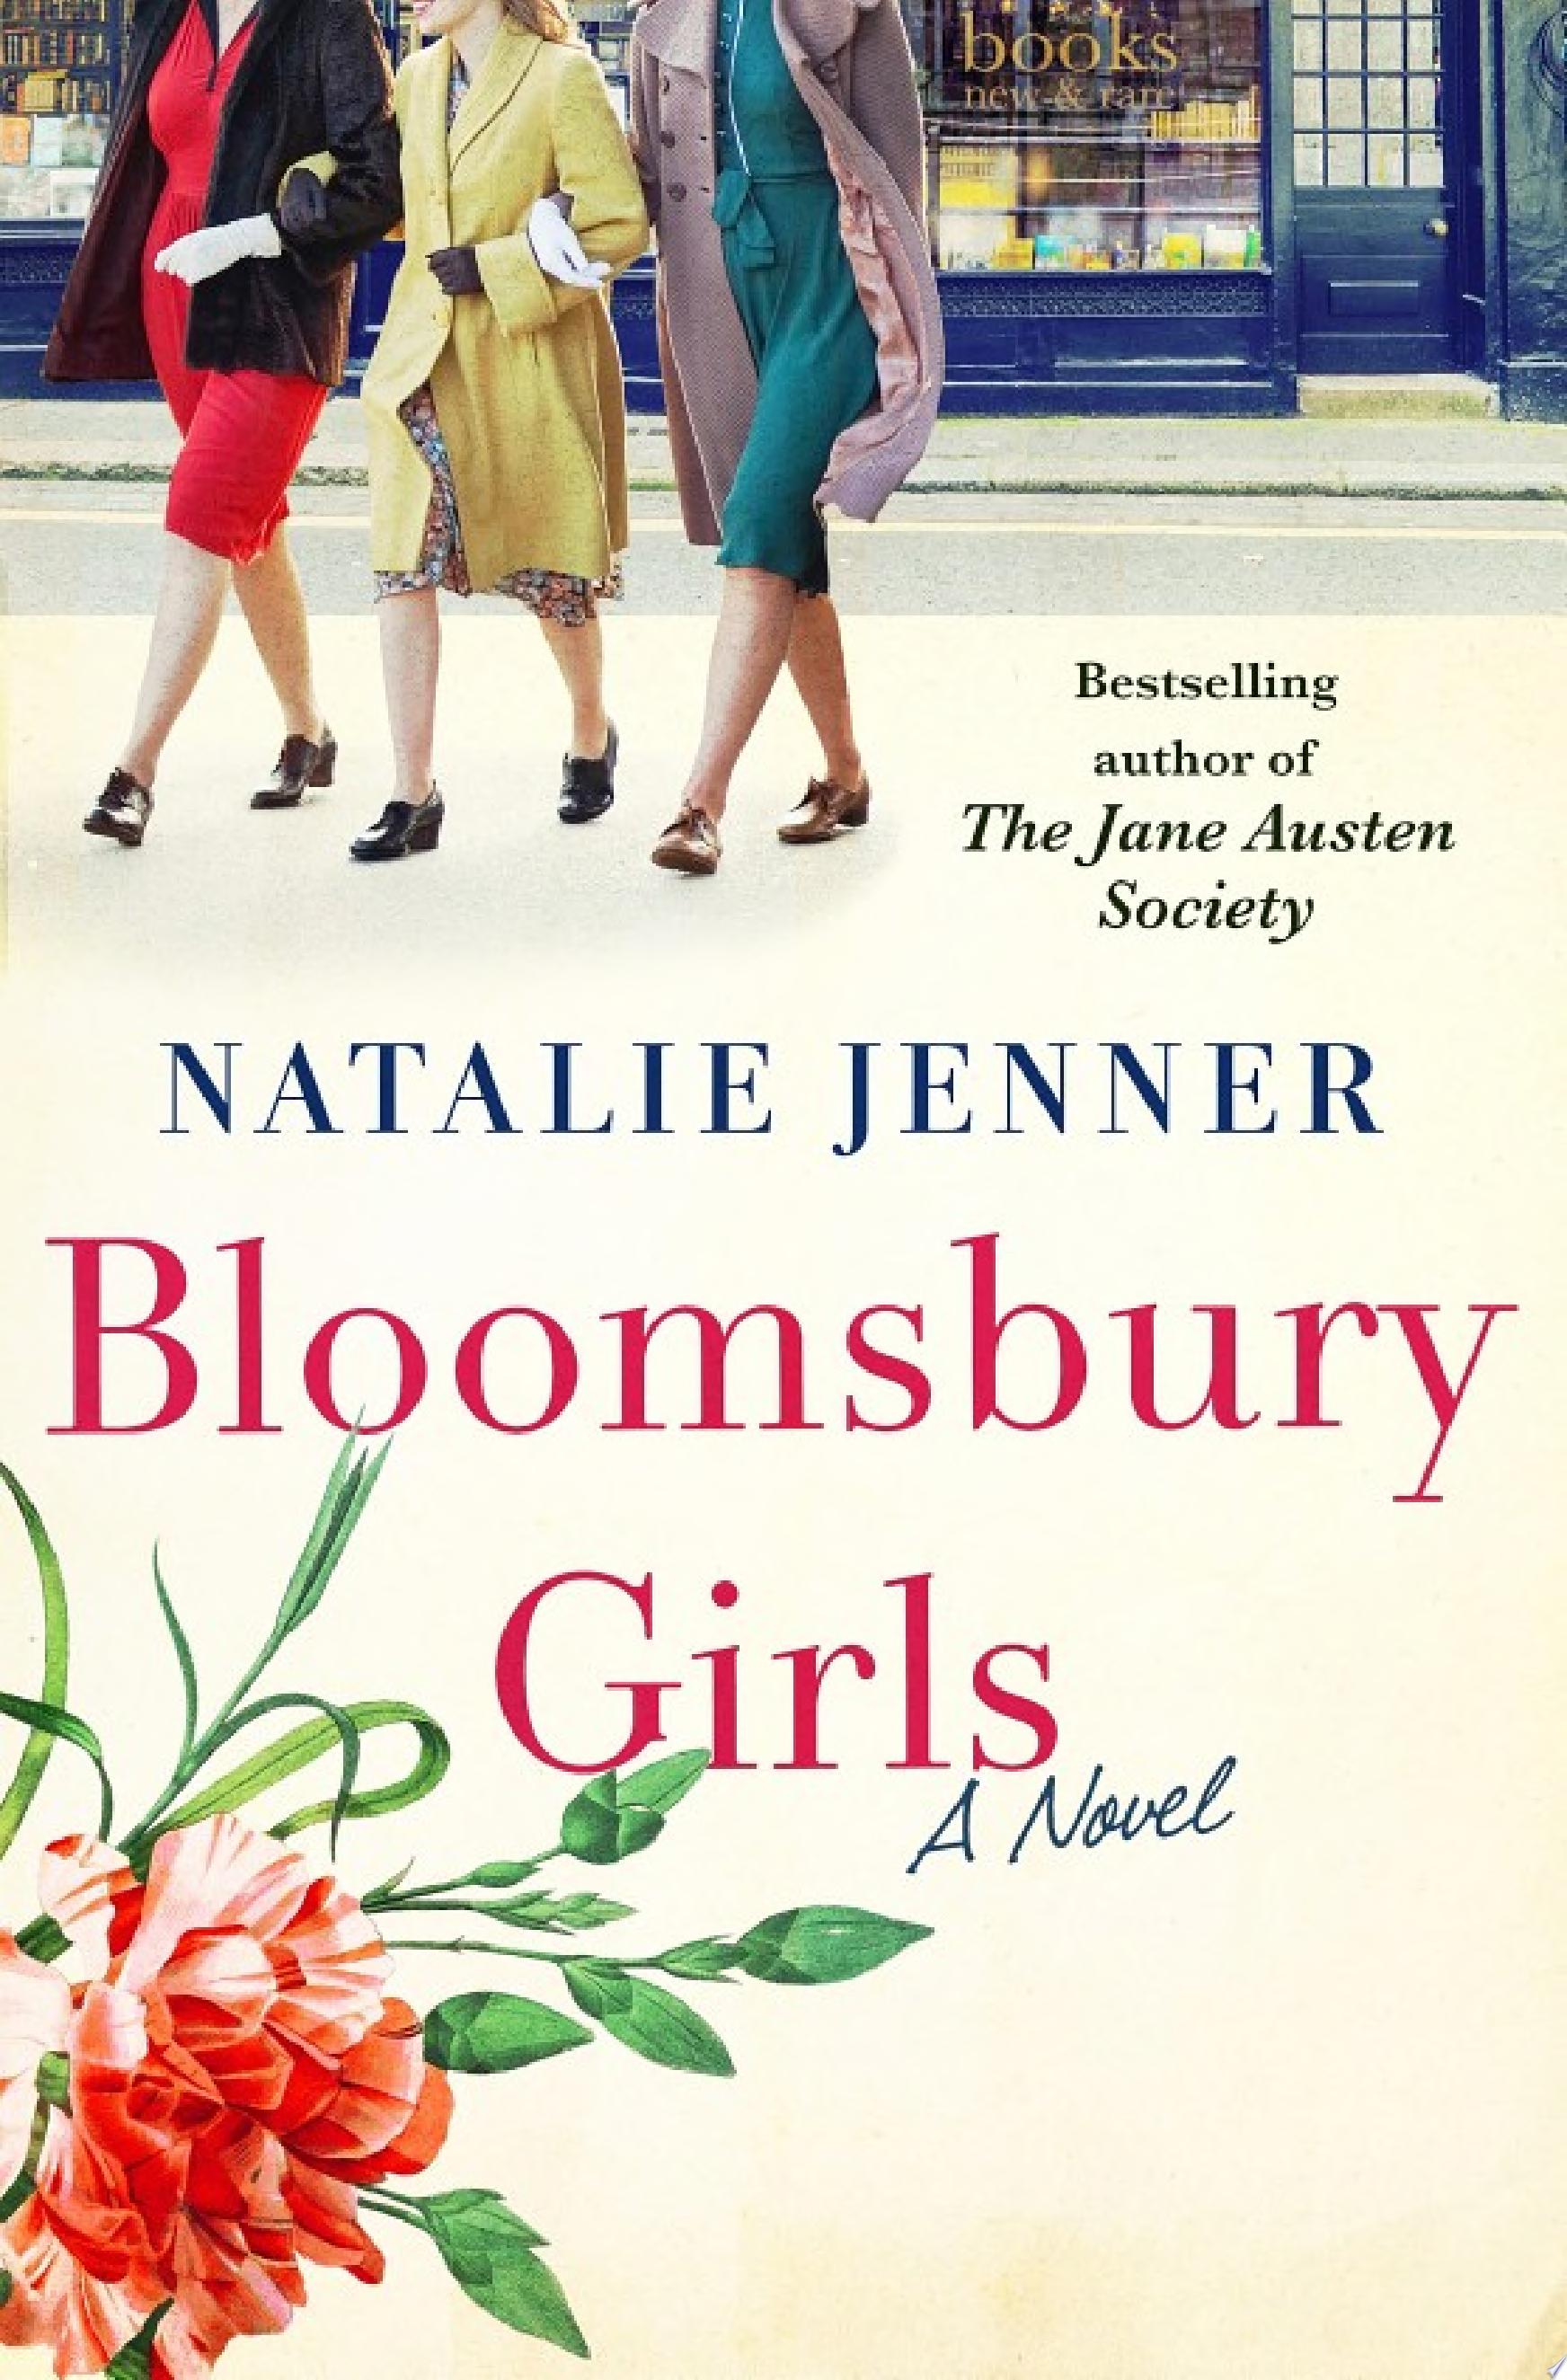 Image for "Bloomsbury Girls"